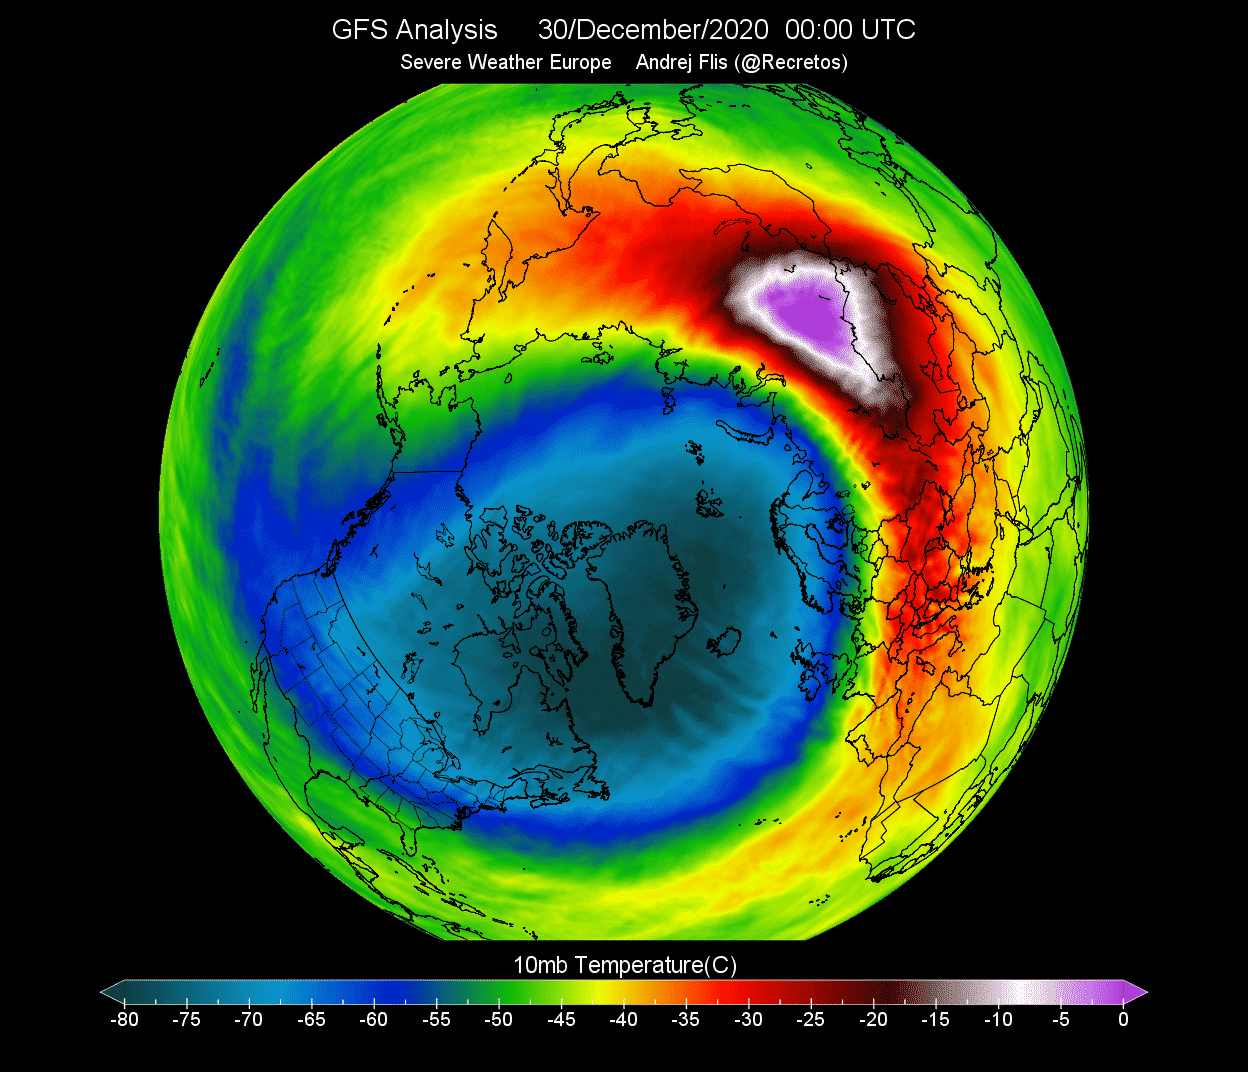 polar-vortex-weather-winter-season-2021-united-states-europe-peak-temperature-stratospheric-warming